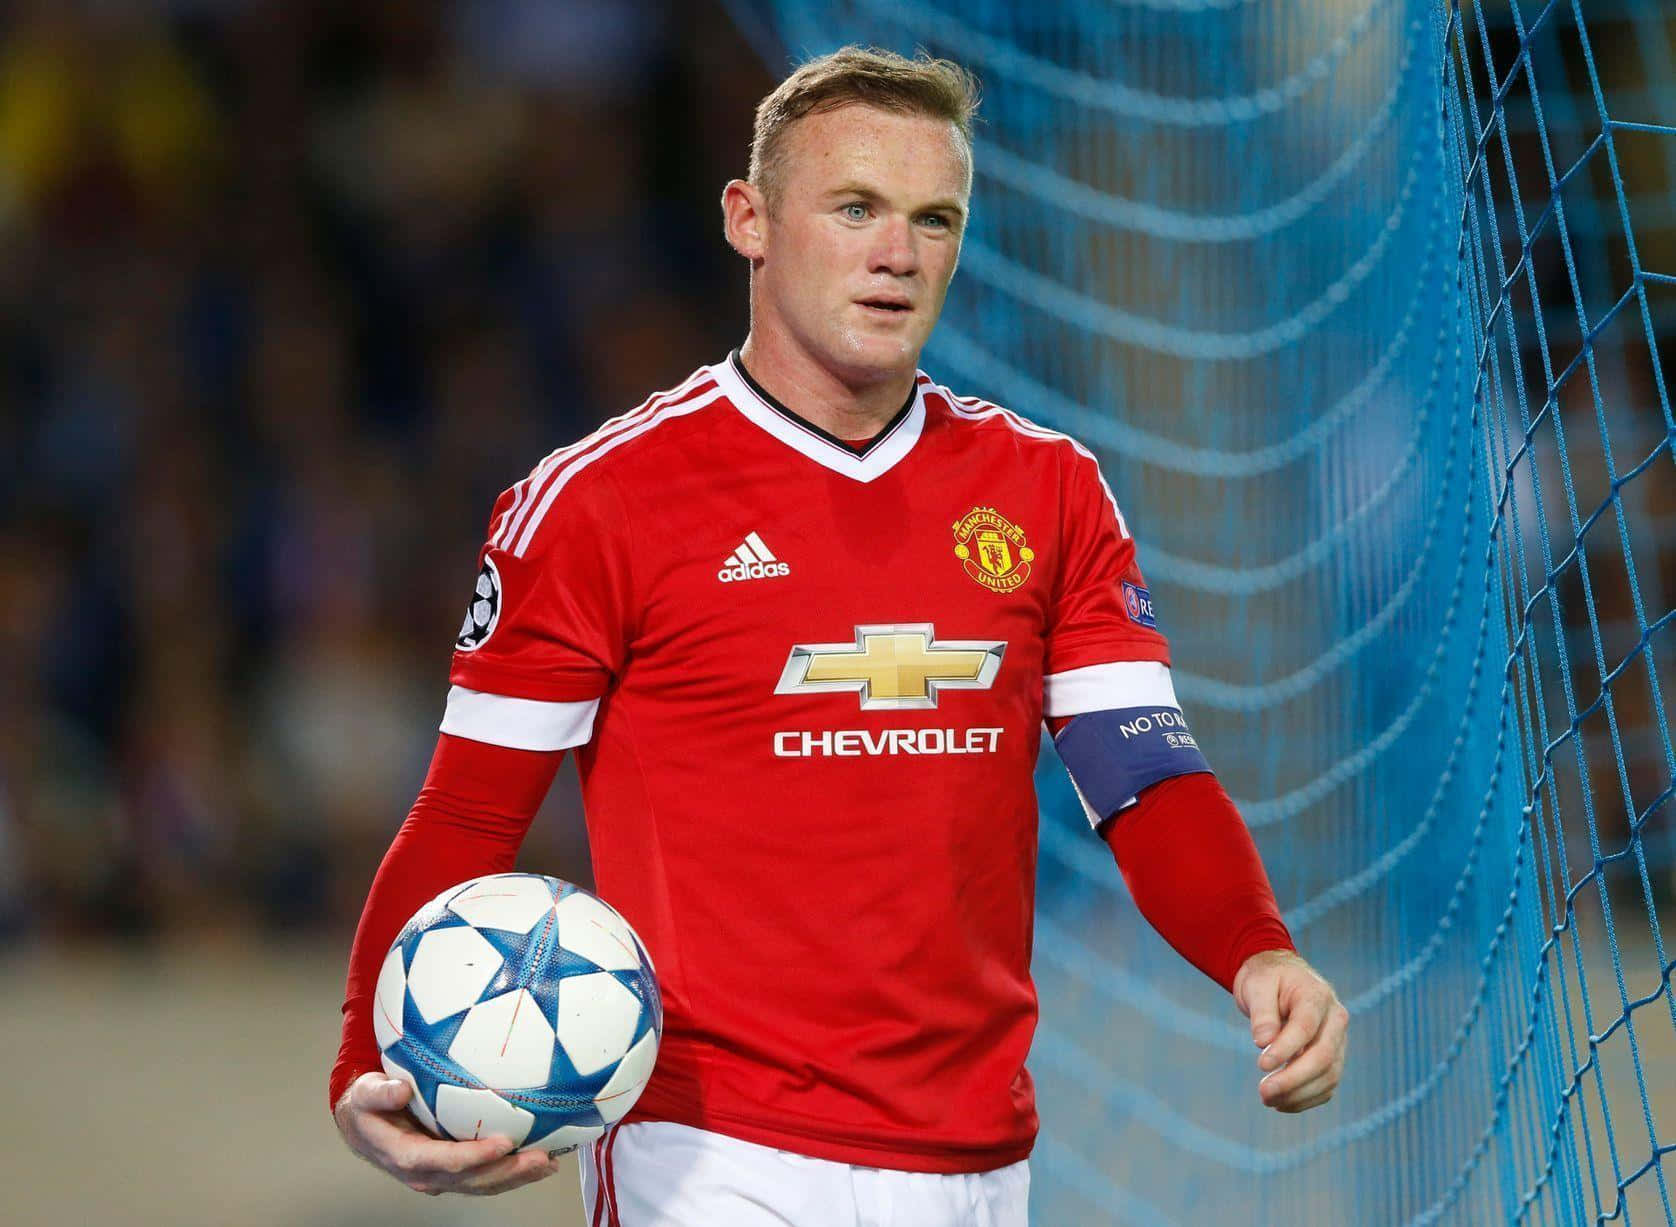 “Soccer Legend Wayne Rooney”